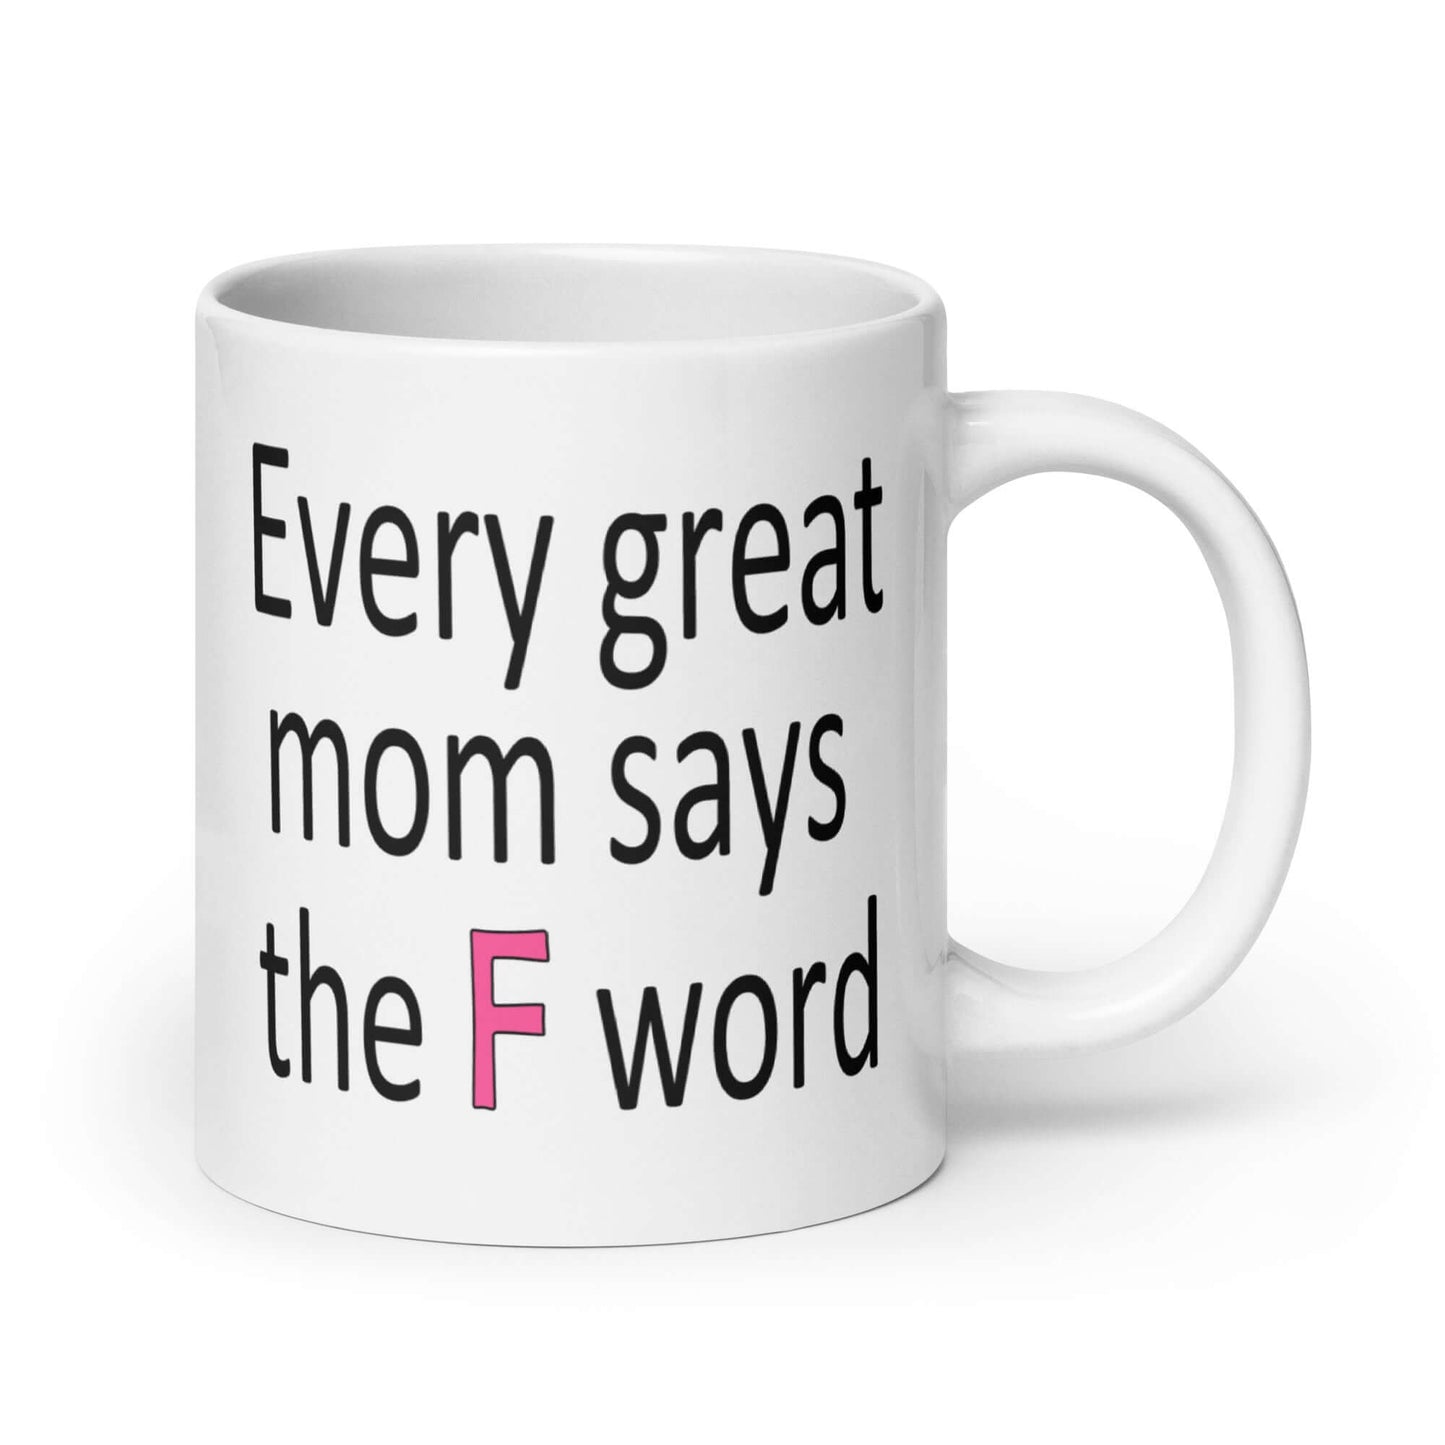 Great moms say the F word mug